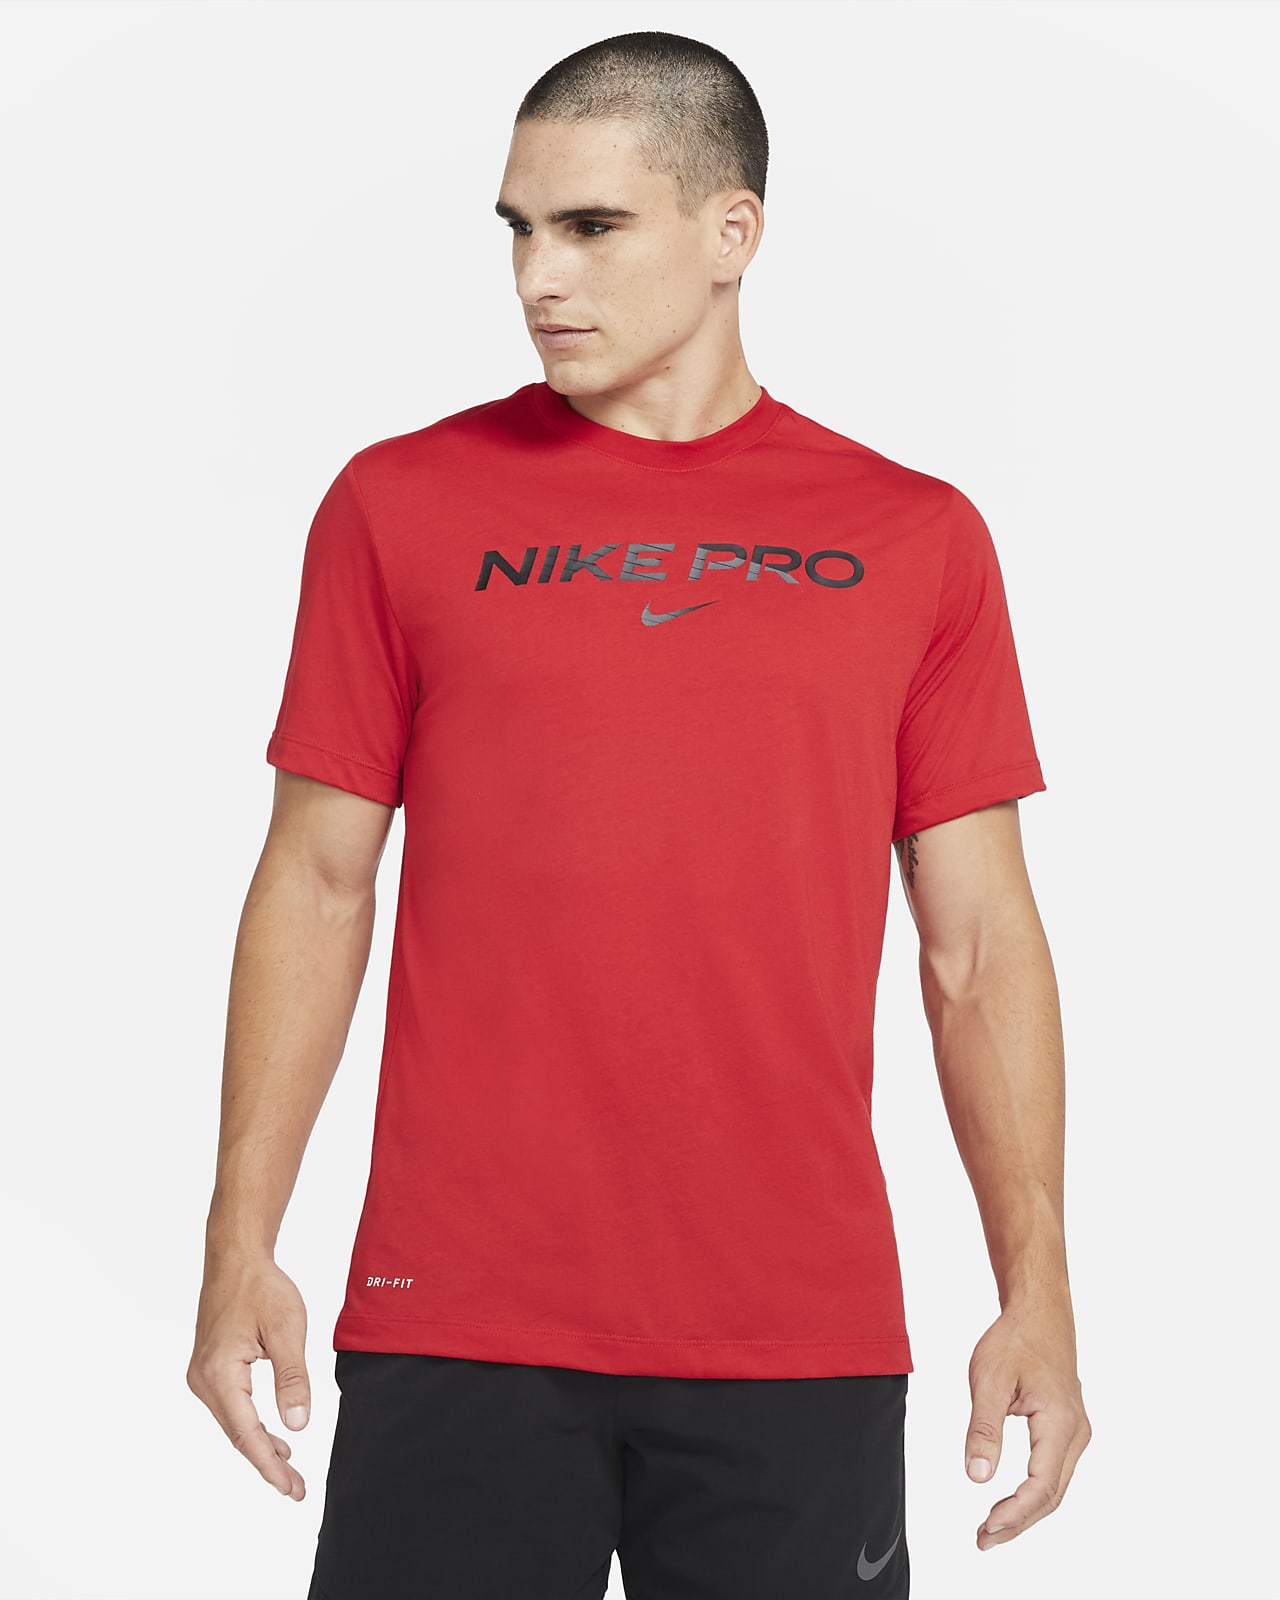 Venta > shirt nike pro > en stock